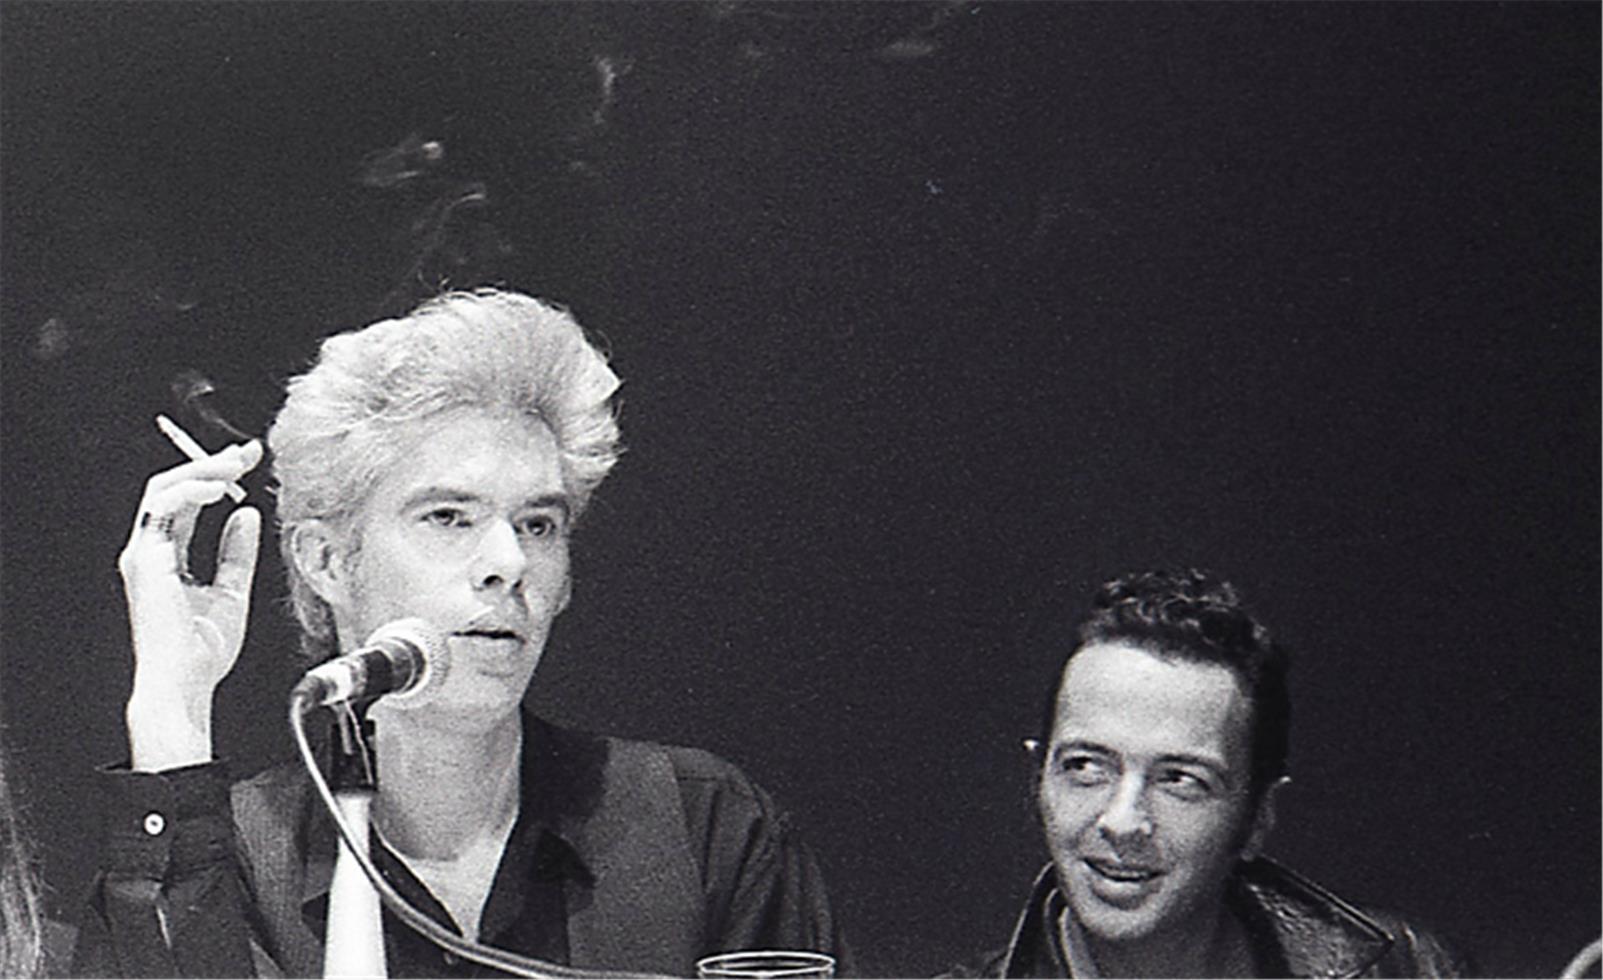 David Godlis Black and White Photograph - Jim Jarmusch and Joe Strummer, NY Film Festival, 1989